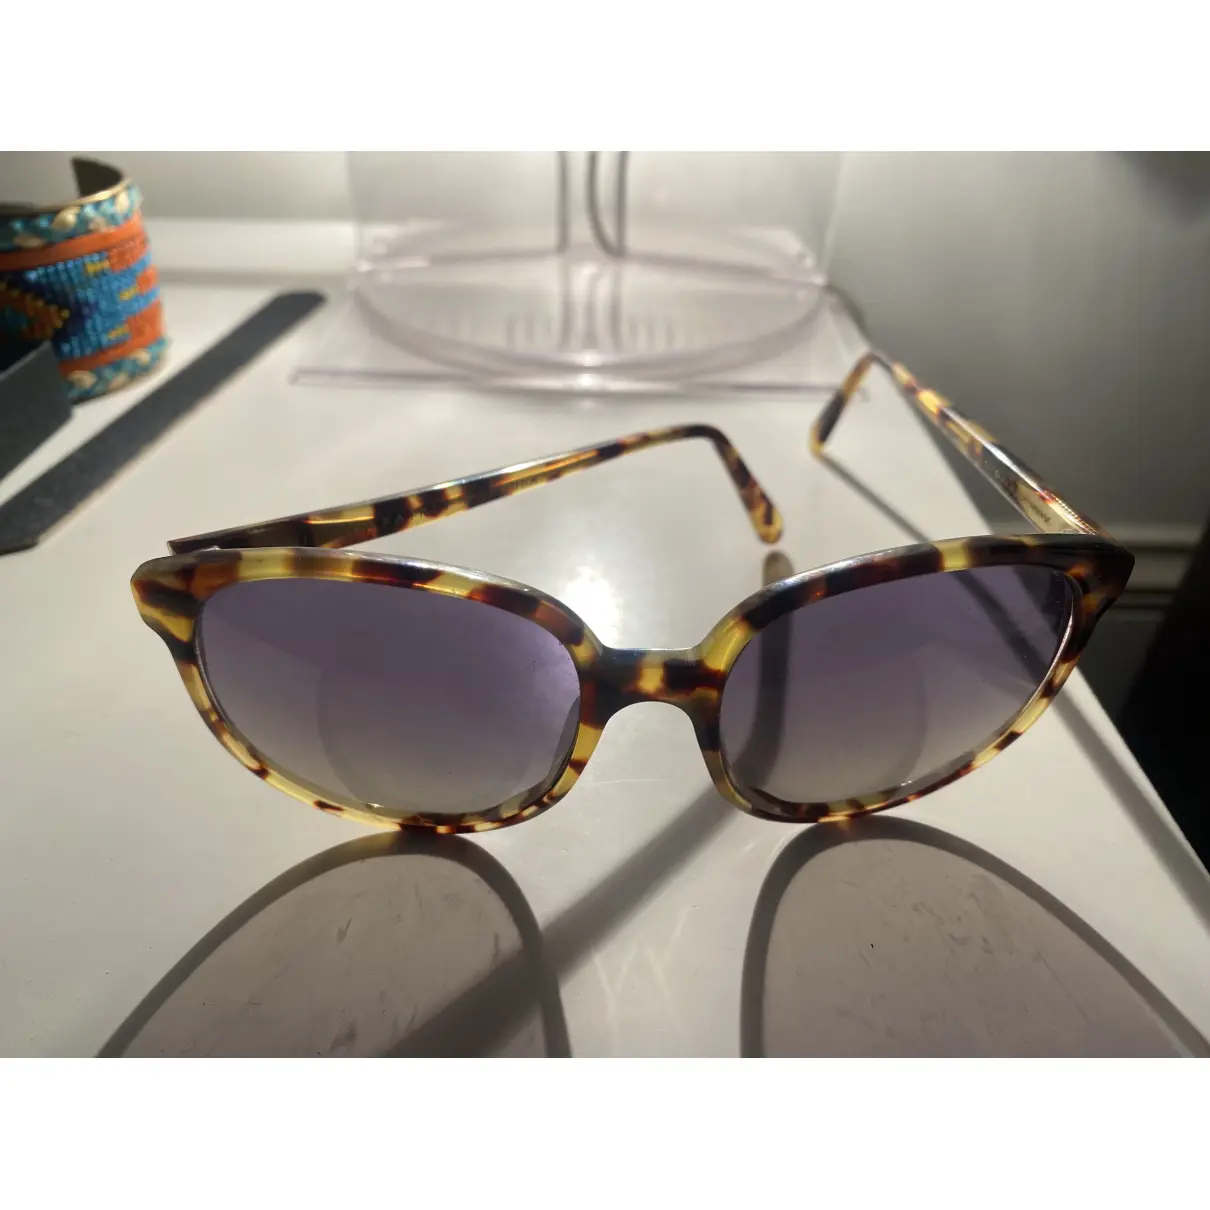 Buy Jimmy Fairly Sunglasses online